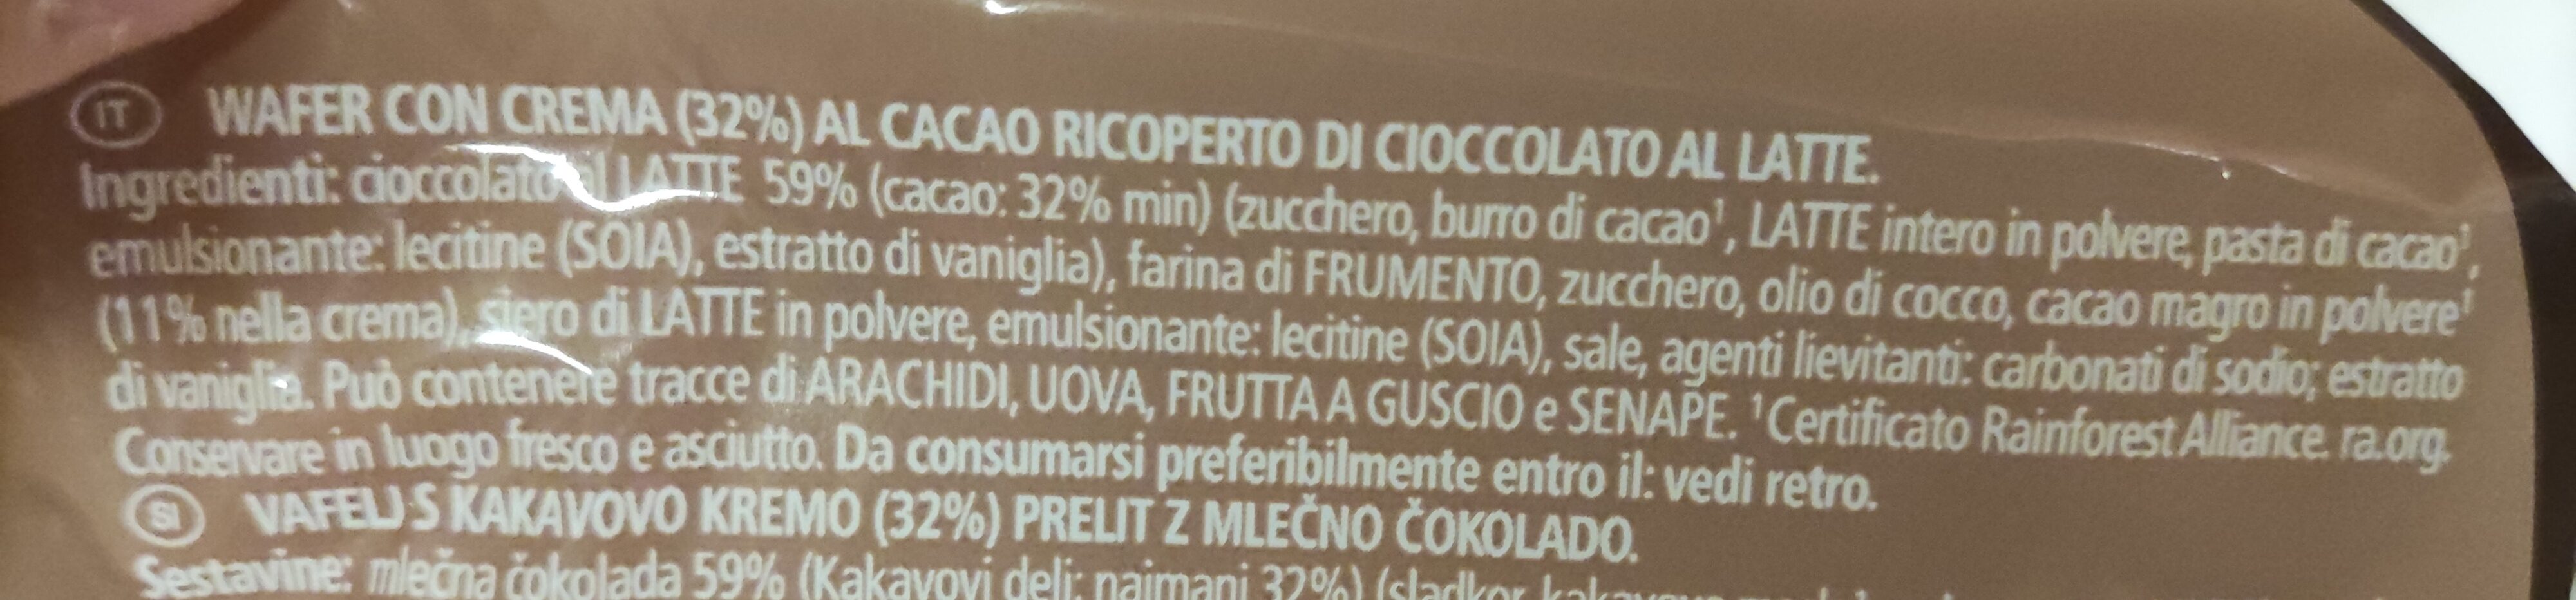 Choco wafer - Ingredienti